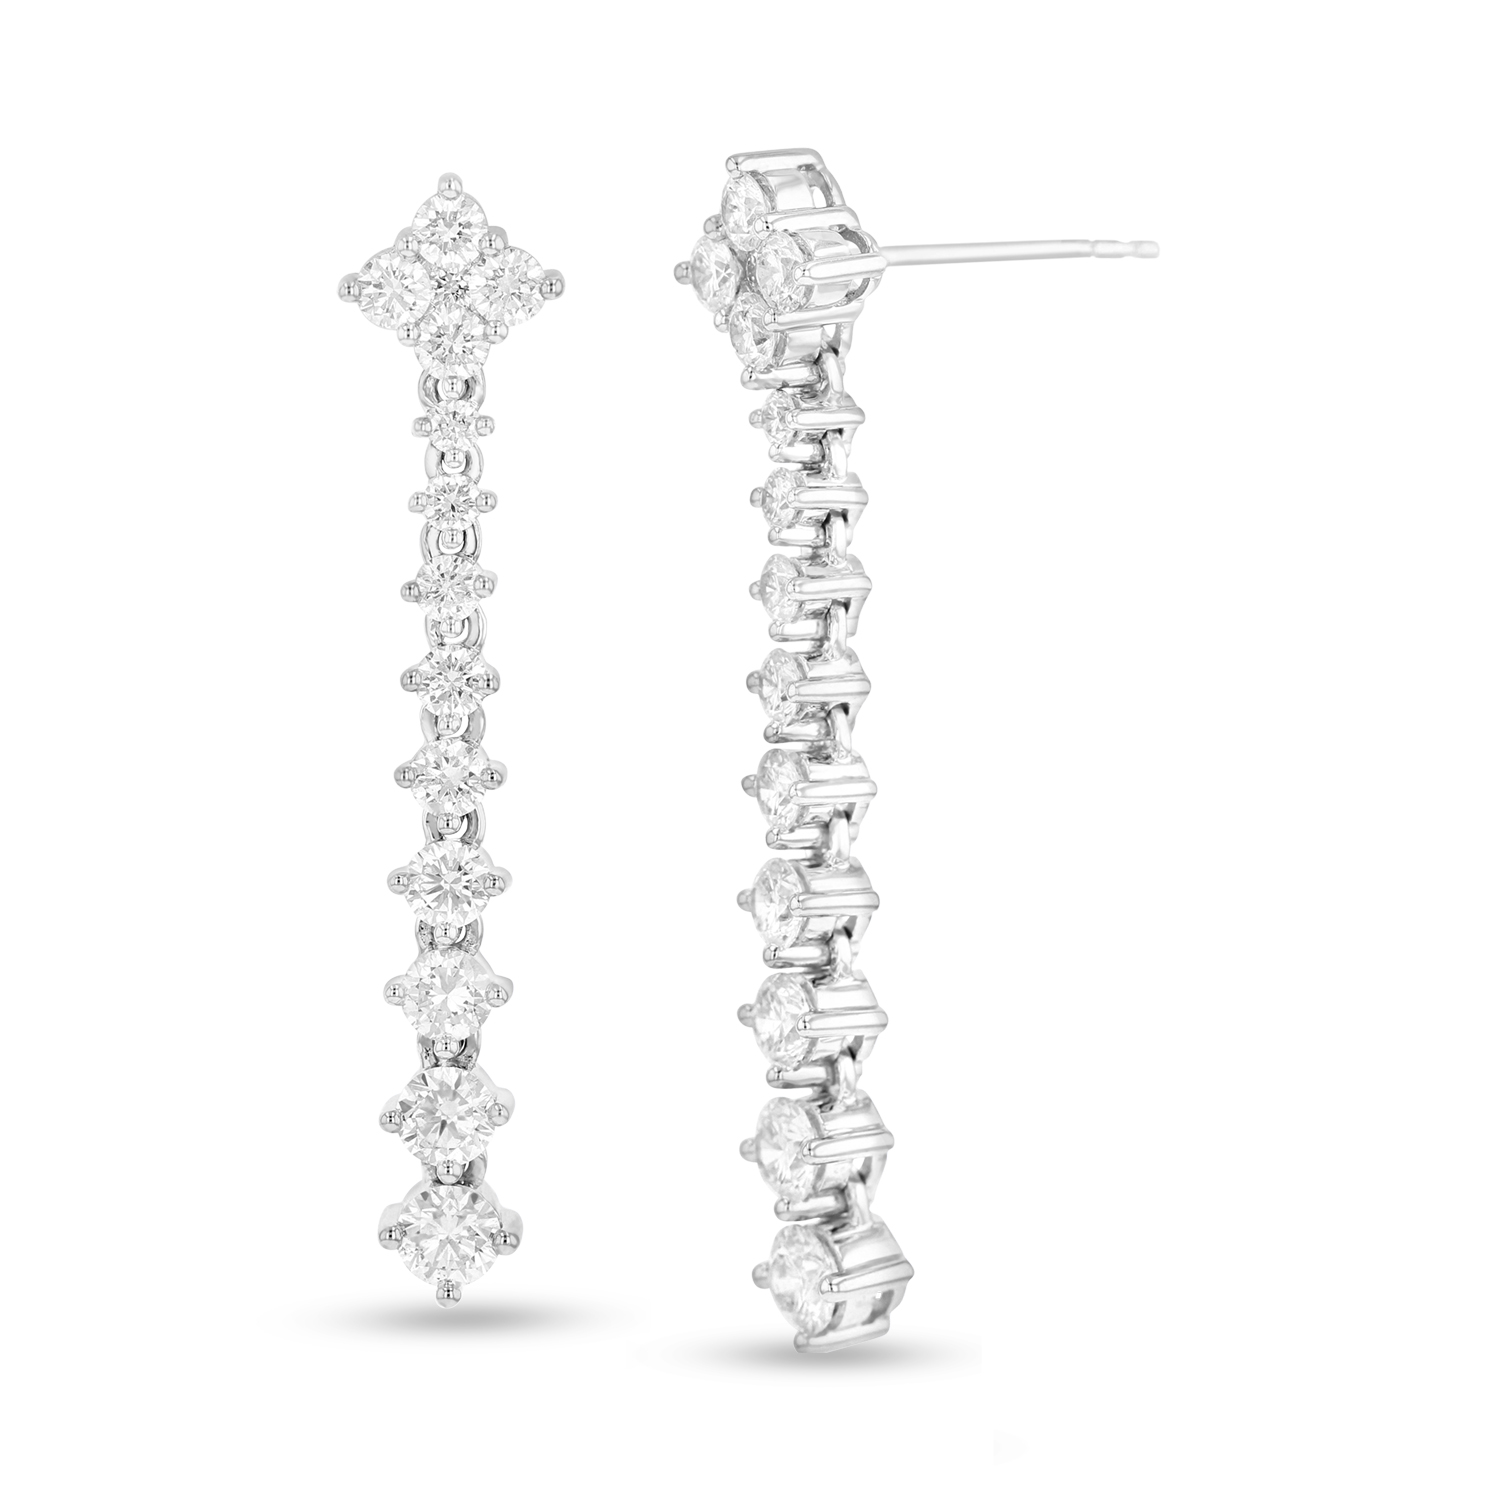 View 1.94ctw Diamonds Fashion Dangling Earrings in 18kWG